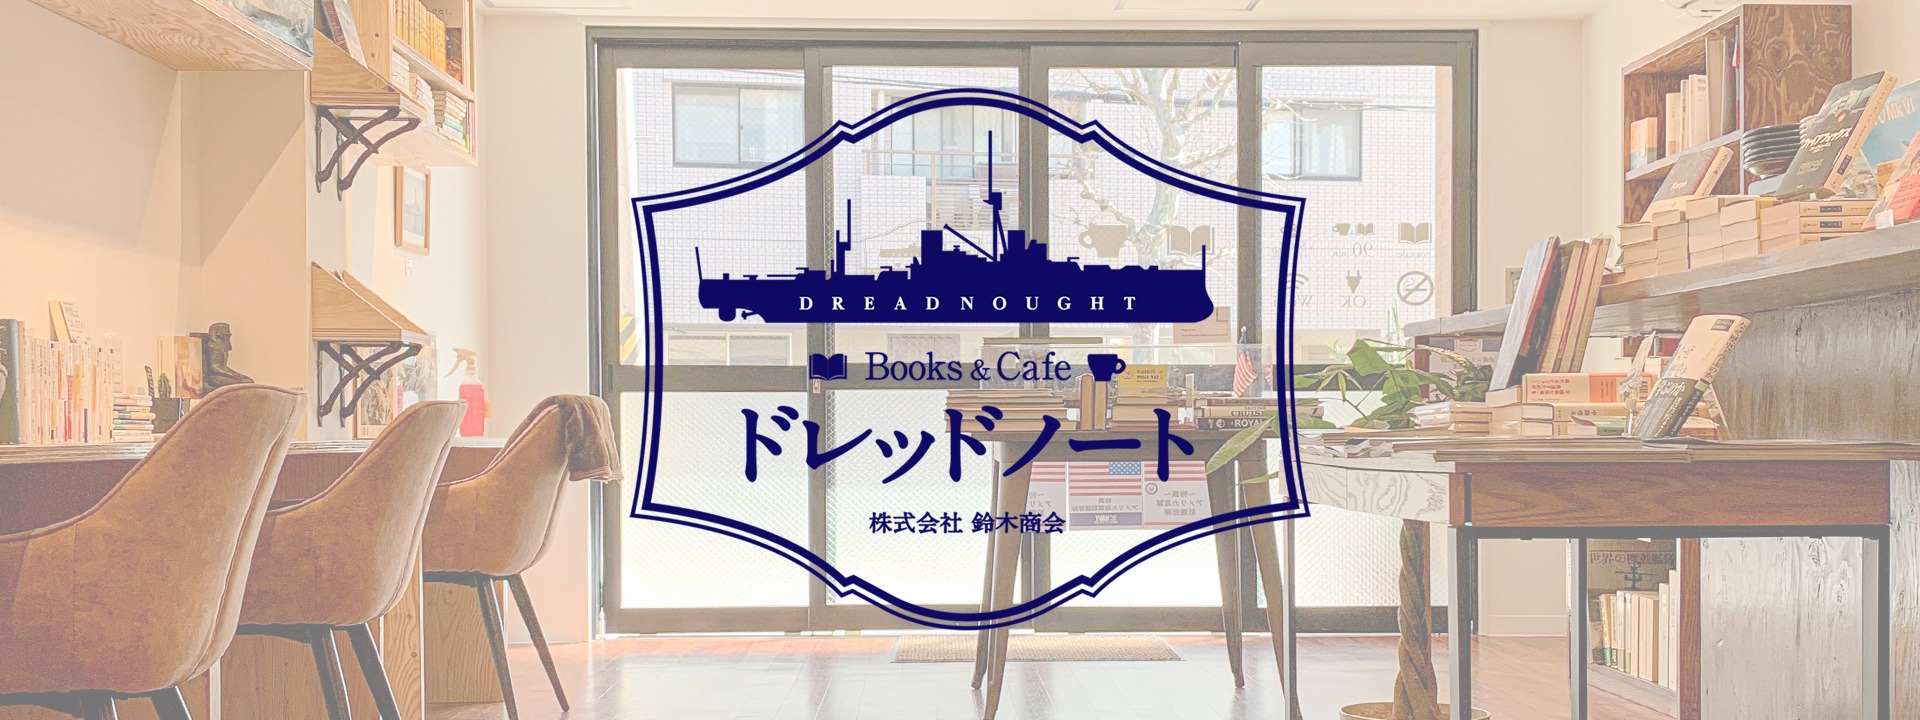 Books & Cafe ドレッドノート